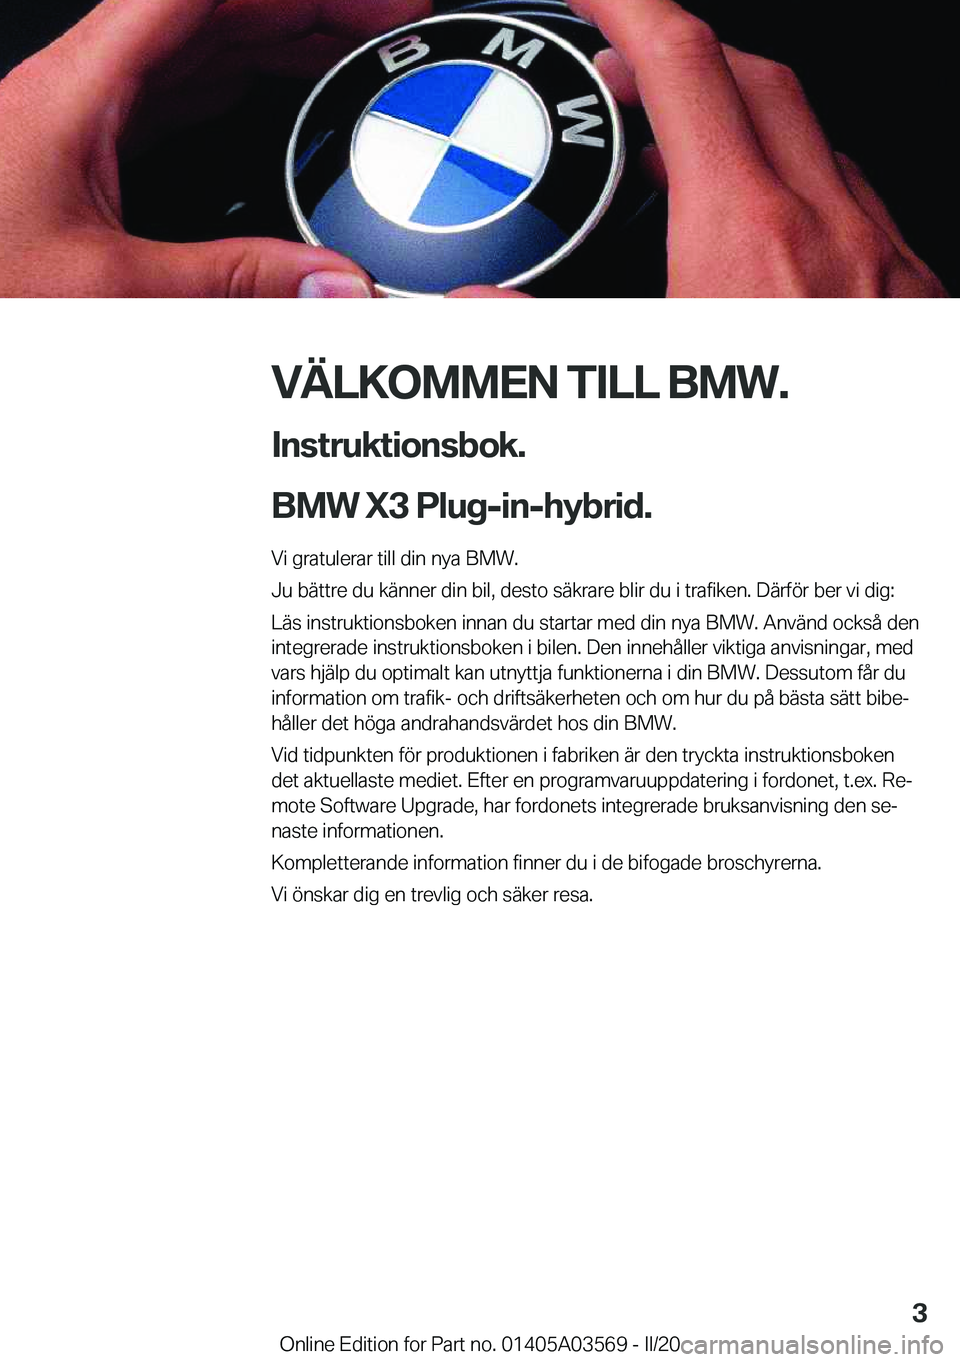 BMW X3 PLUG IN HYBRID 2020  InstruktionsbÖcker (in Swedish) �V�Ä�L�K�O�M�M�E�N��T�I�L�L��B�M�W�.�I�n�s�t�r�u�k�t�i�o�n�s�b�o�k�.
�B�M�W��X�3��P�l�u�g�-�i�n�-�h�y�b�r�i�d�.
�V�i��g�r�a�t�u�l�e�r�a�r��t�i�l�l��d�i�n��n�y�a��B�M�W�.
�J�u��b�ä�t�t�r�e�